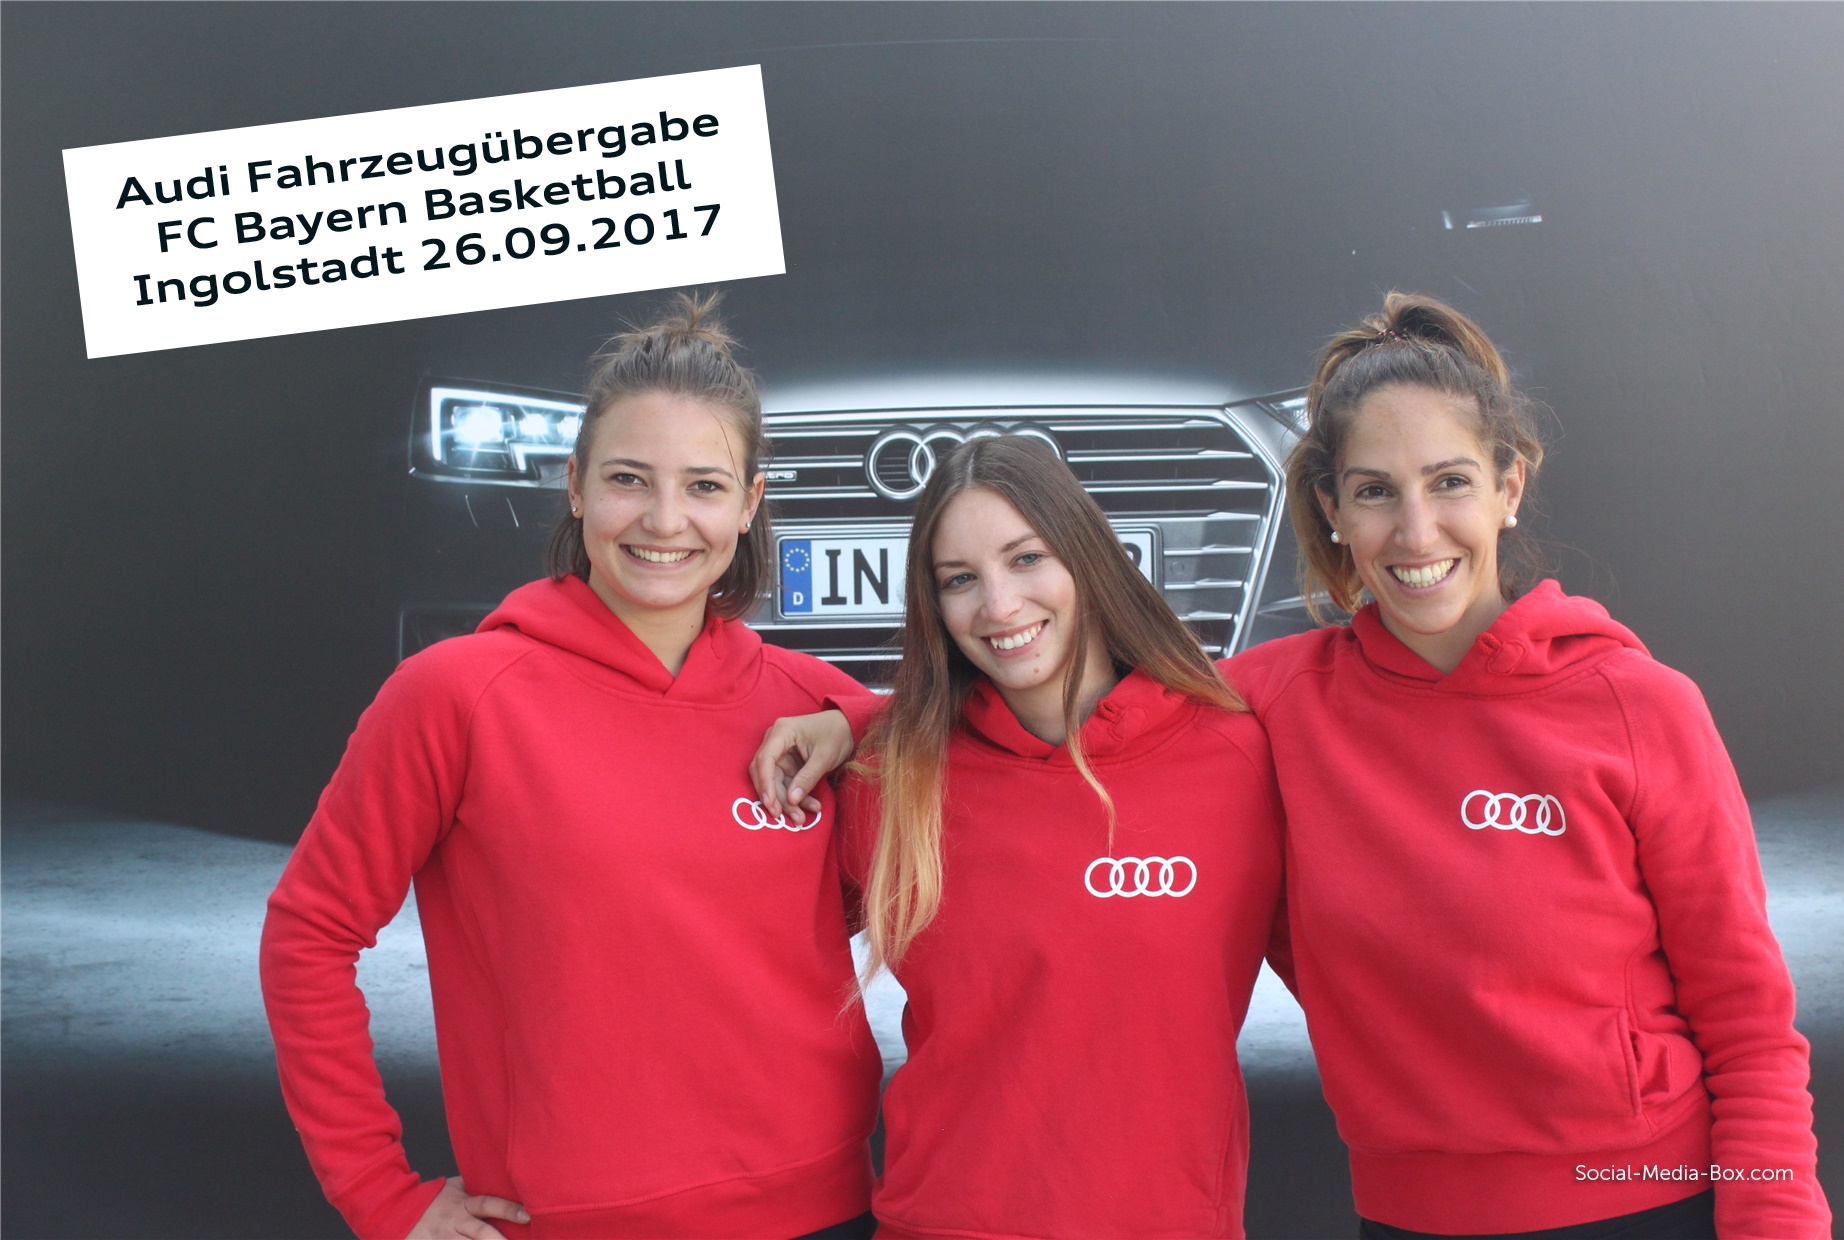 Audi-FCBayernBasketball_Fahrzeuguebergabe_Social-Media-Box_Print1